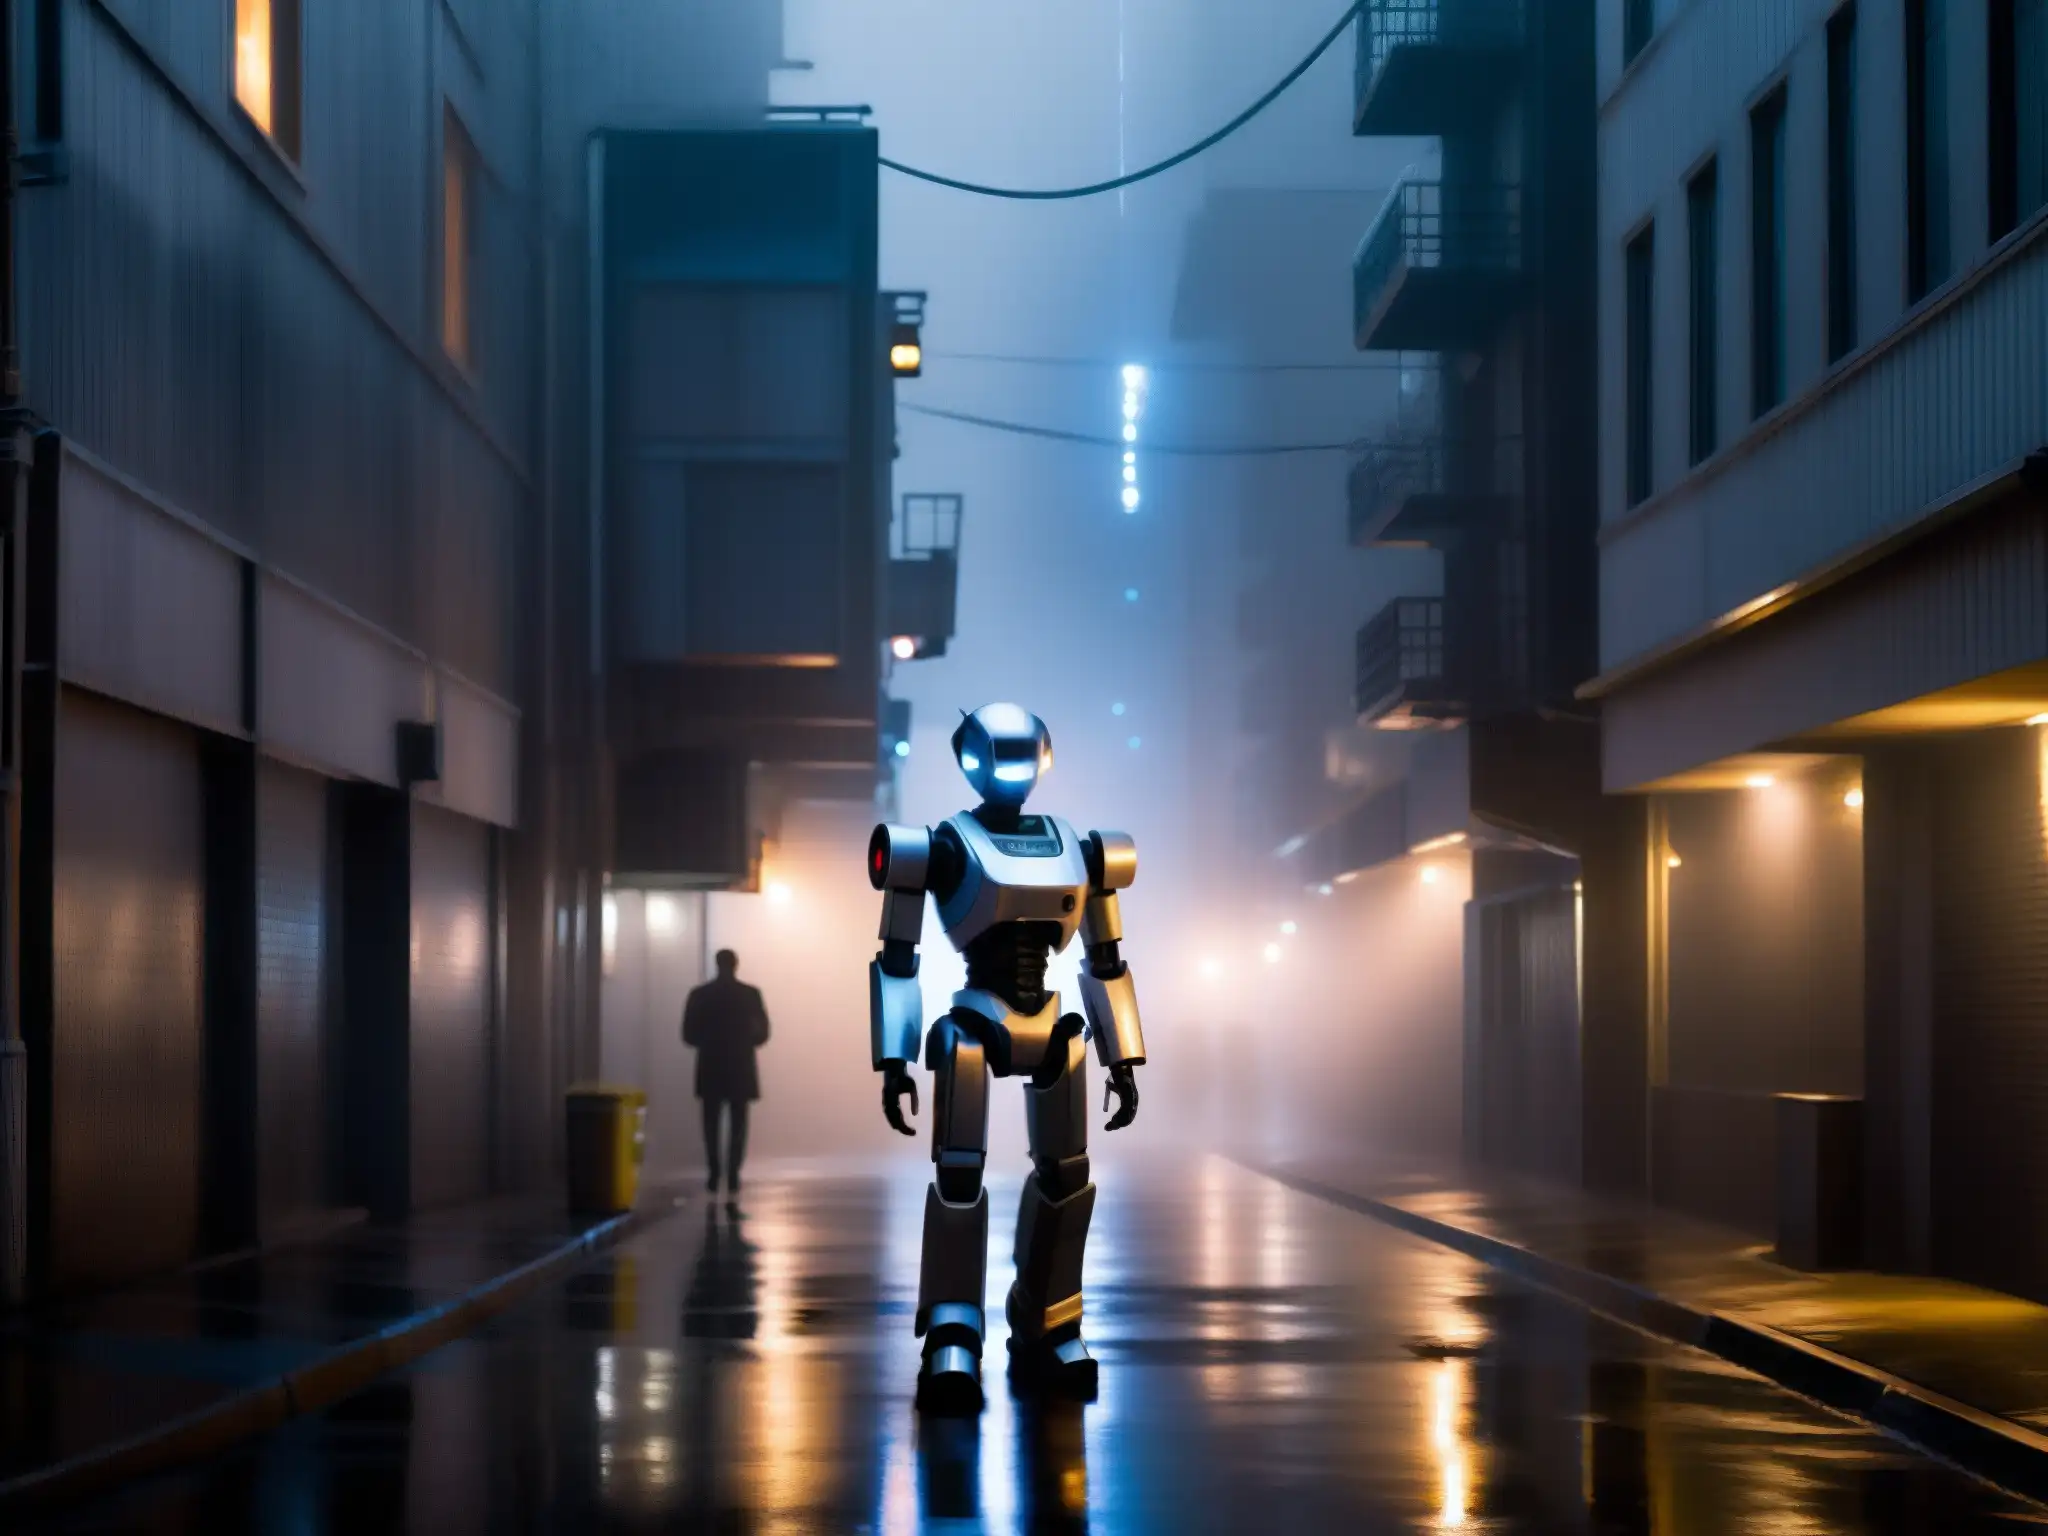 Un callejón misterioso y futurista con un robot metálico entre la neblina, evocando leyendas urbanas inteligencia artificial